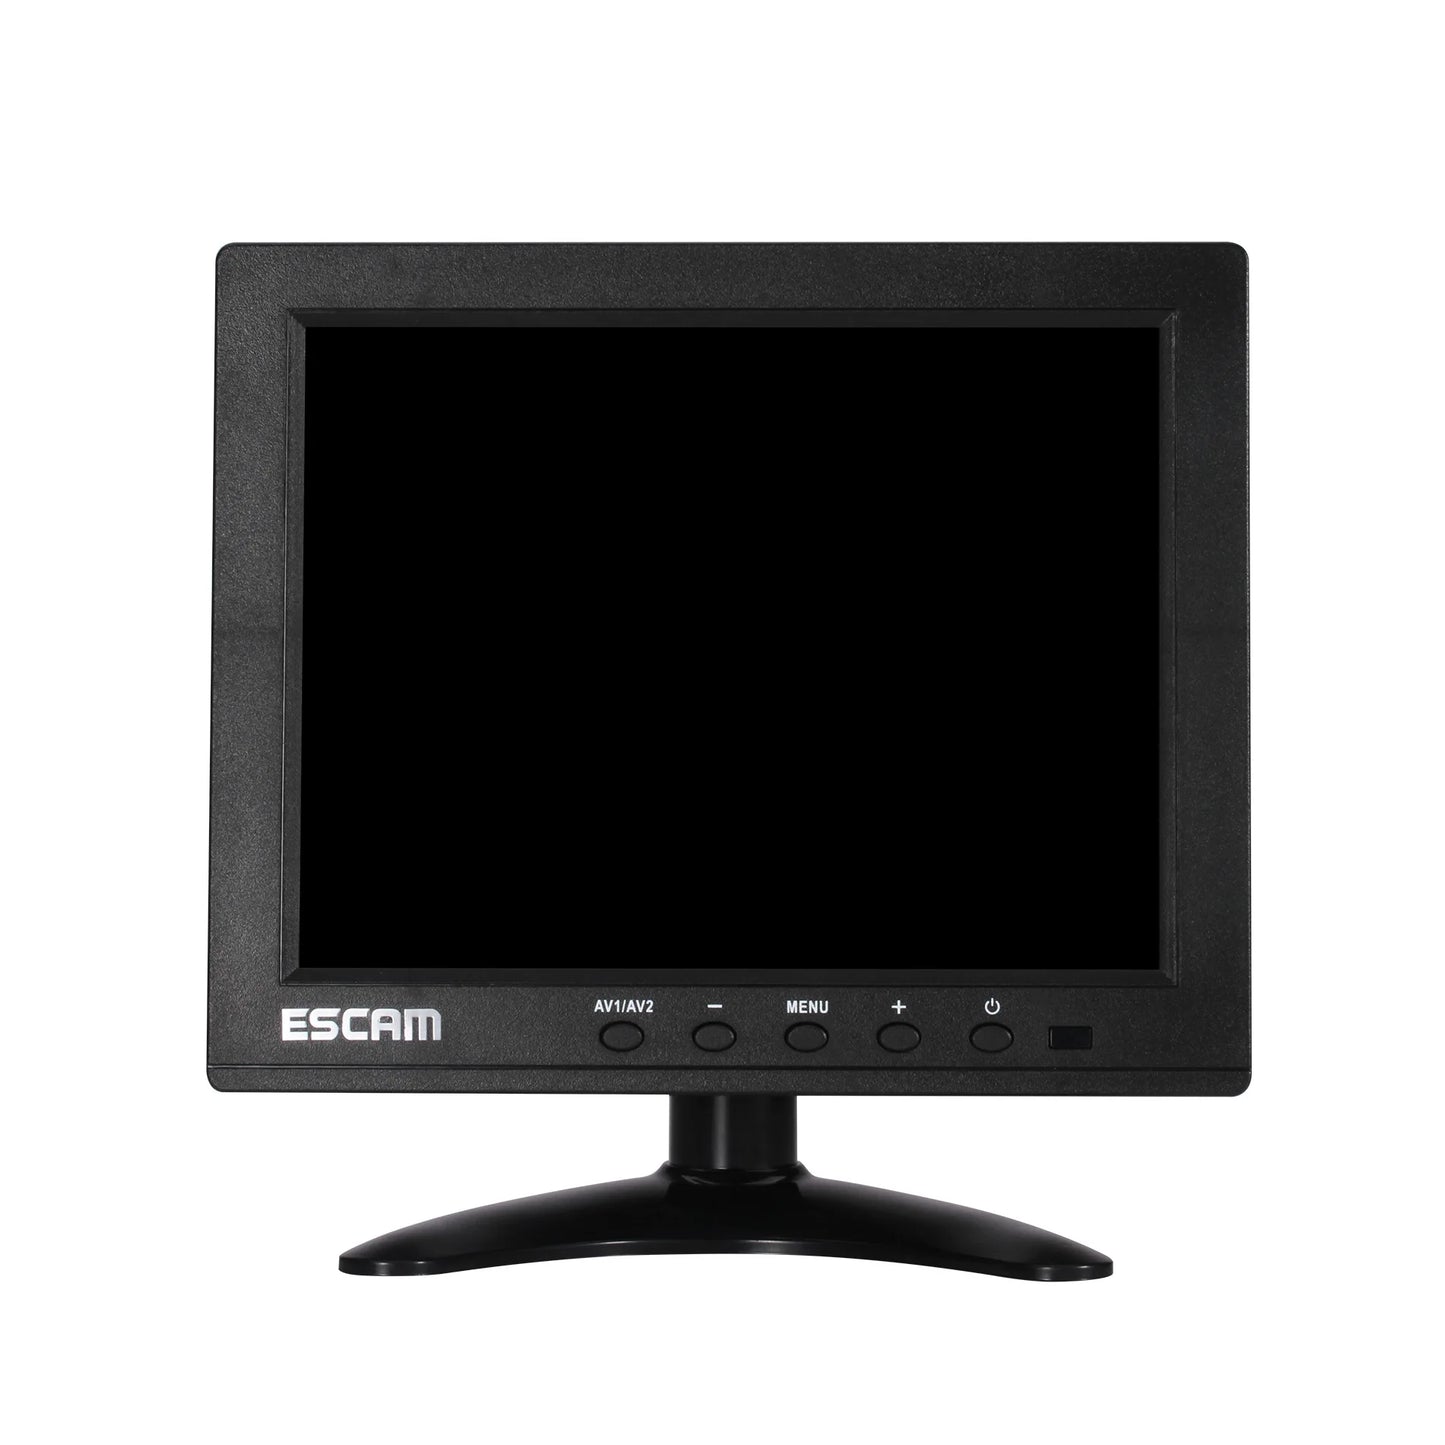 LCD 1024x768 CCTV Monitor with VGA HDMI-compatible